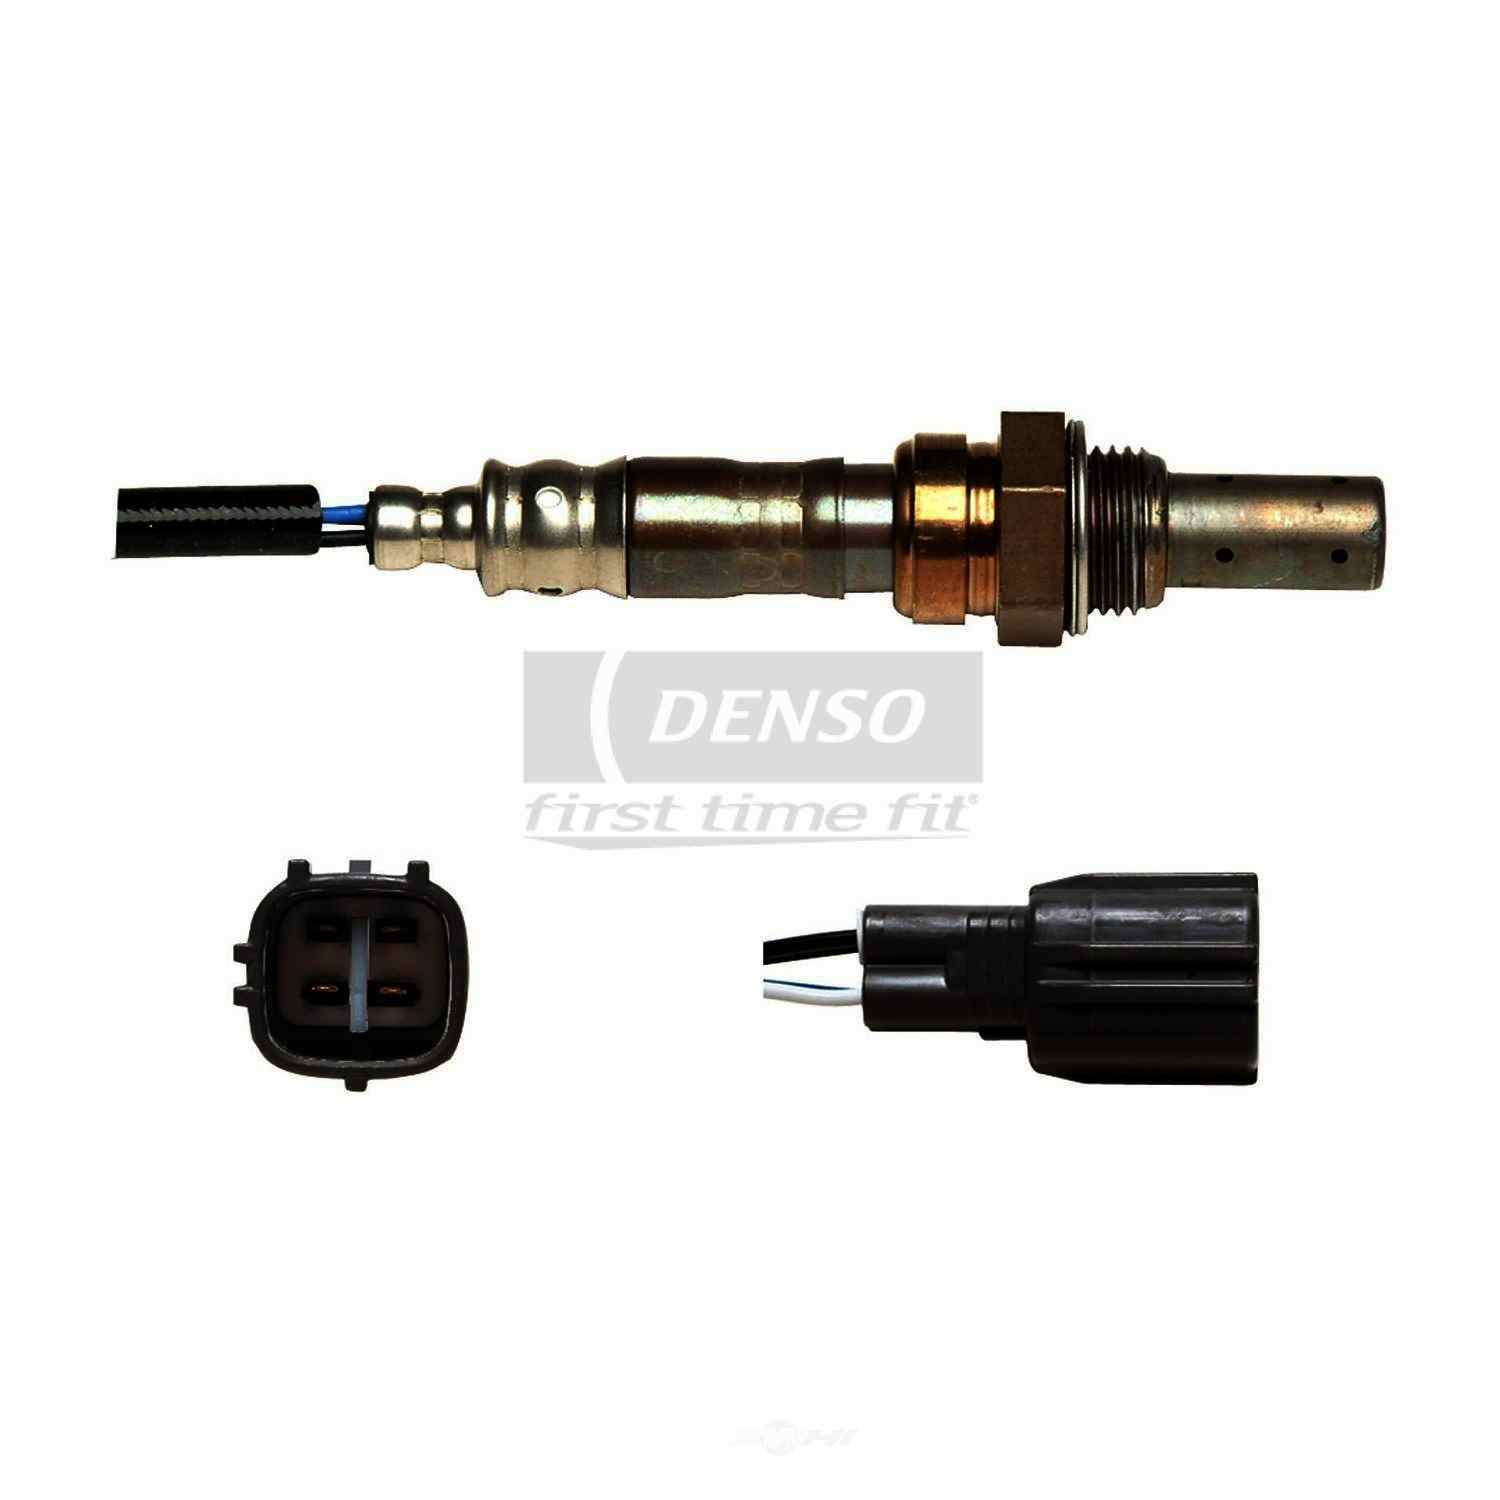 APSG OXYGEN SENSORS - Denso OE Oxygen Sensor (Upstream) - BA1 234-9009